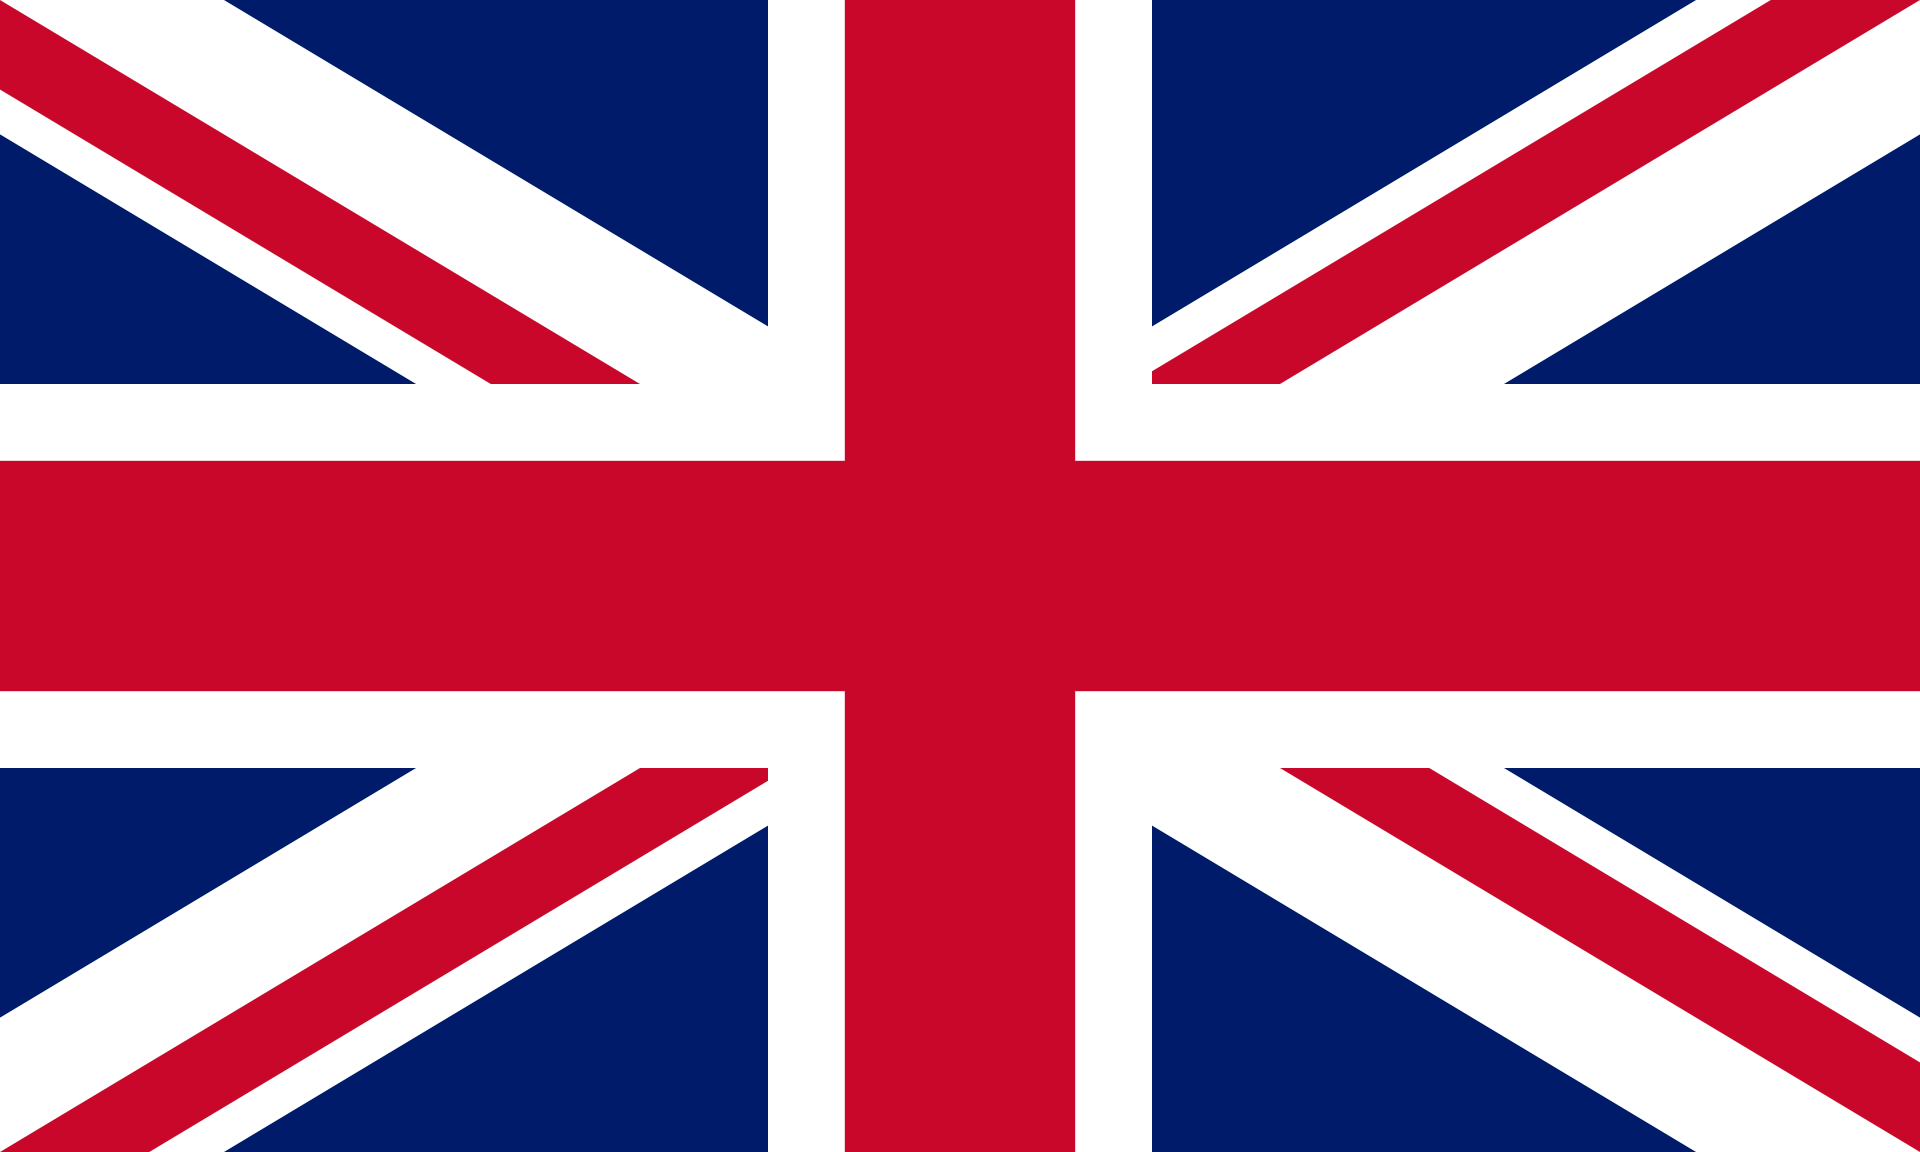 selected english language flag